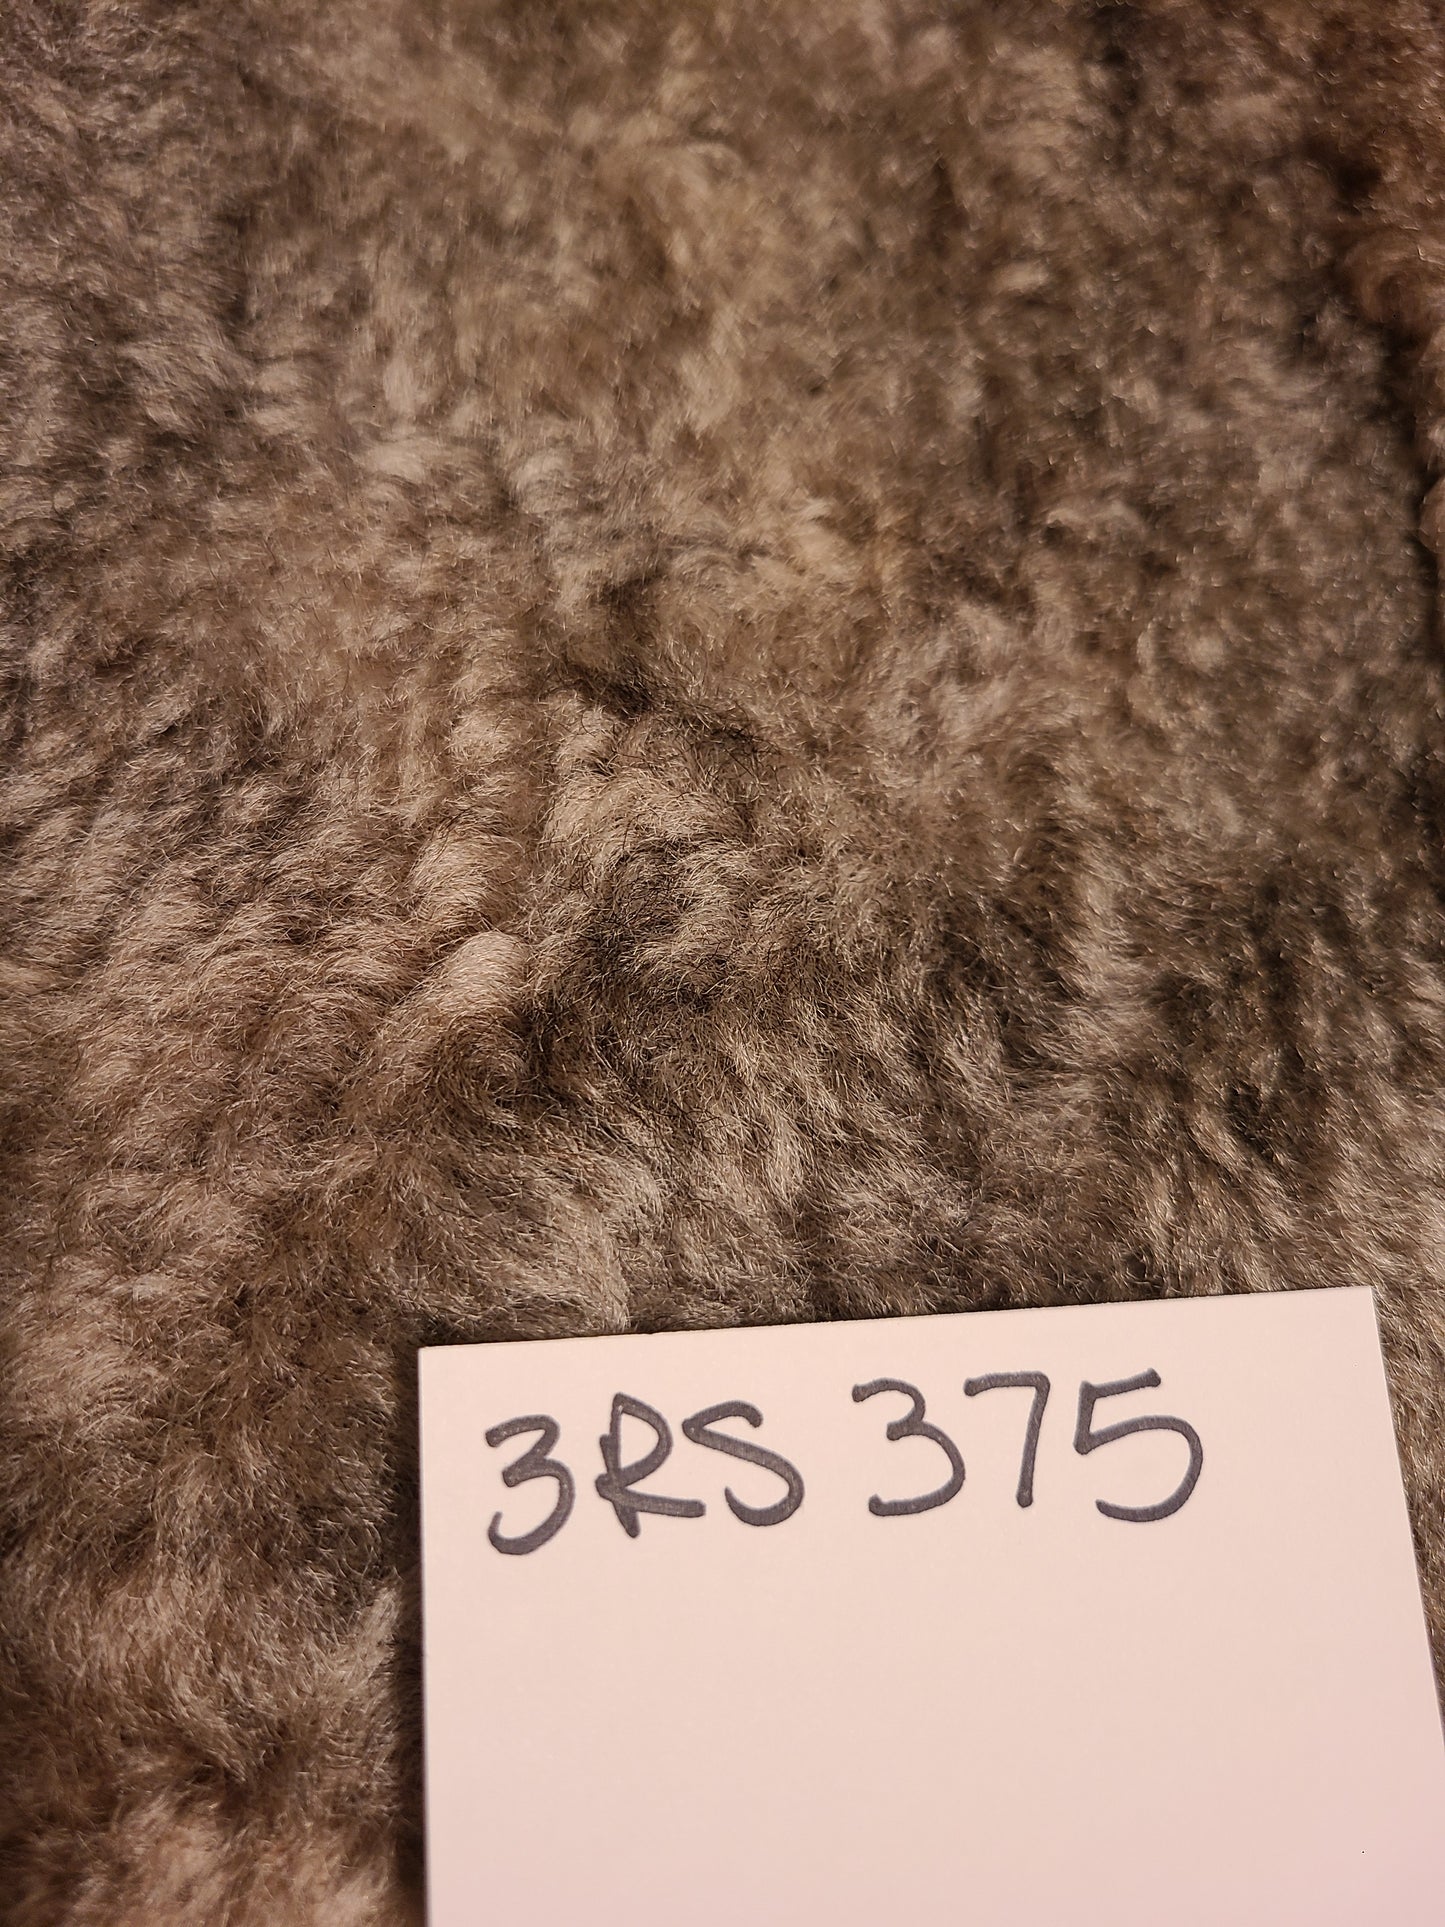 Sheepskin Big Natural Color Silver- Gray Pelt 49 x 37 Inch 3RS375